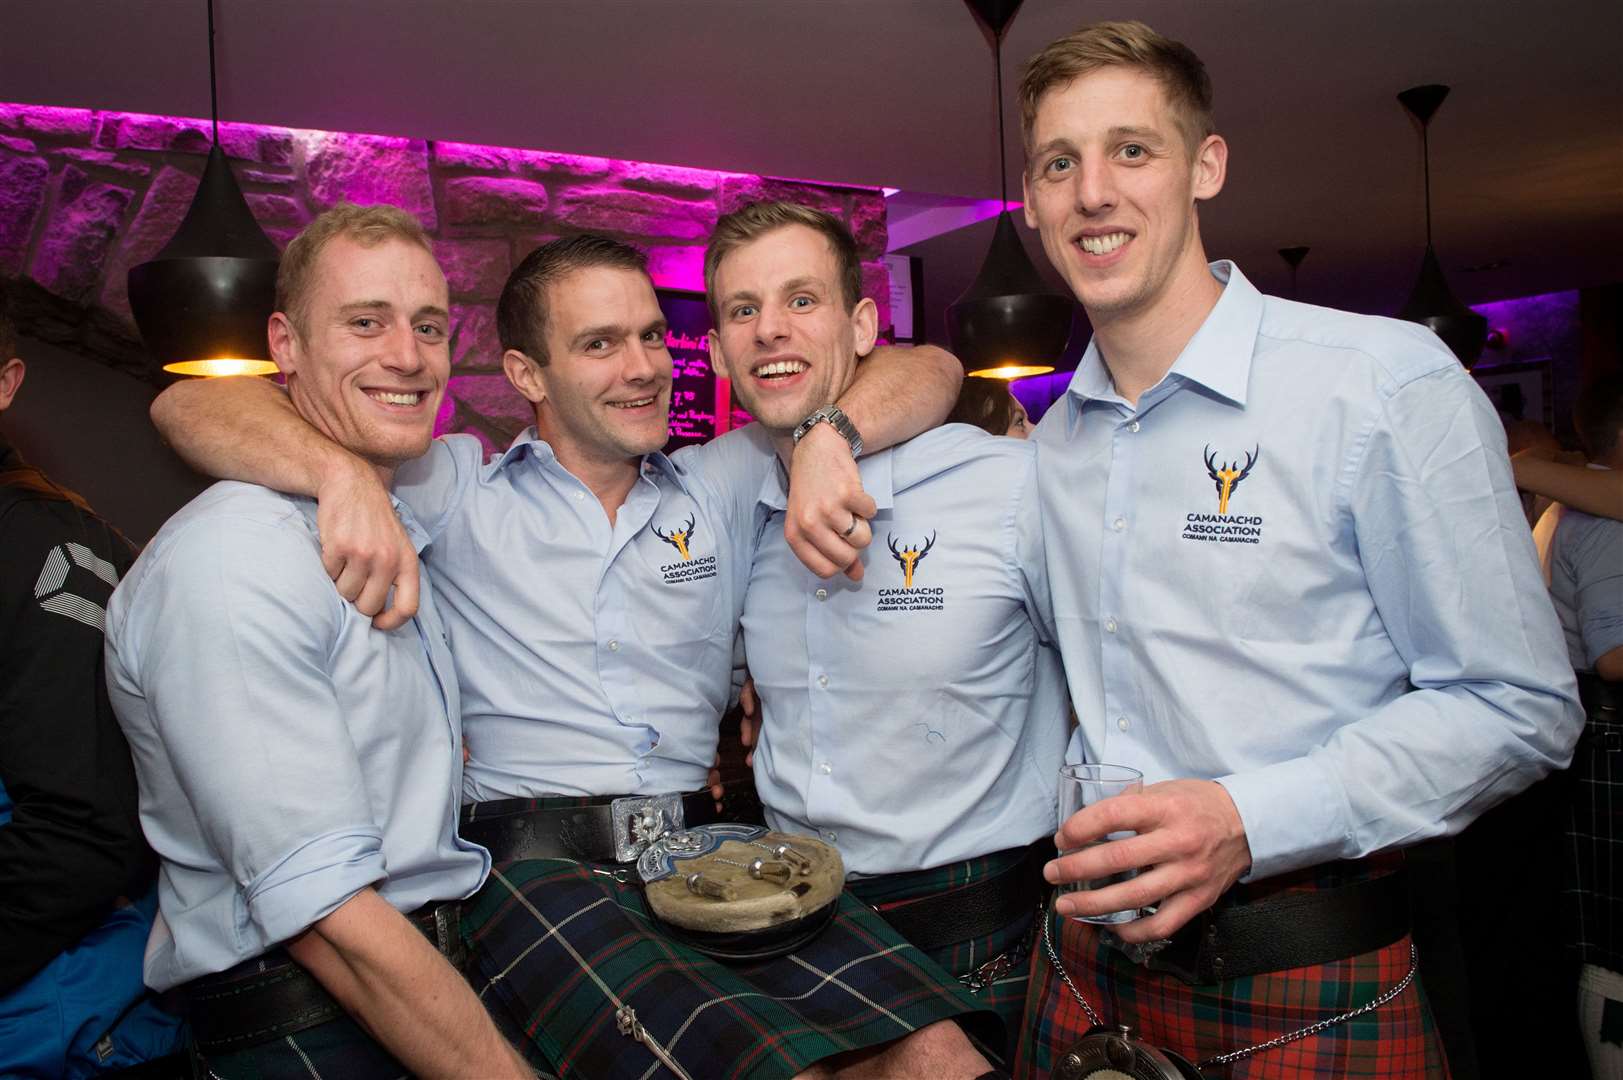 Celebrating the Scotland shinty win in The Den are (left to right) Connor Cormack, Keith Macrae, Zander Ferguson and Shaun Nicolson.